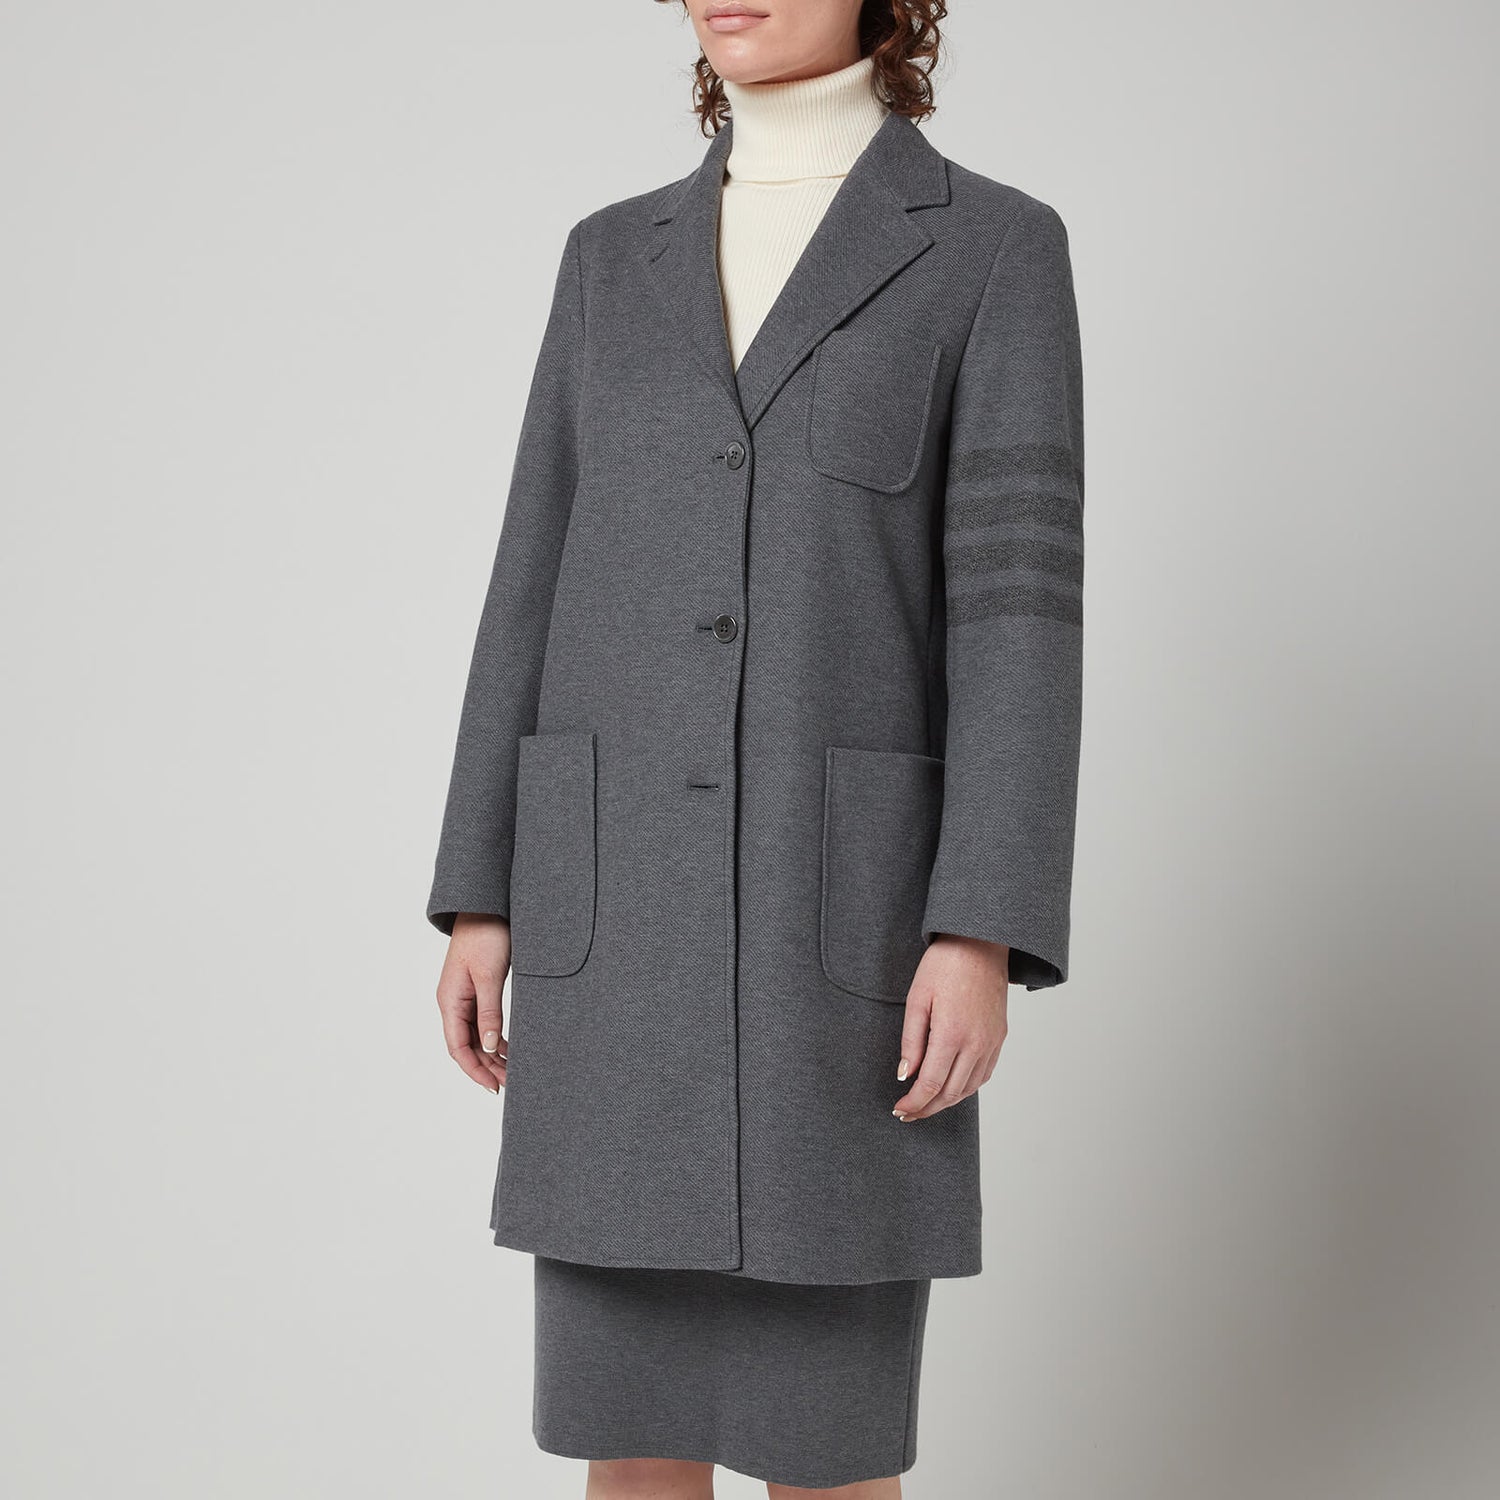 Thom Browne Women's Sack Over Coat - Med Grey